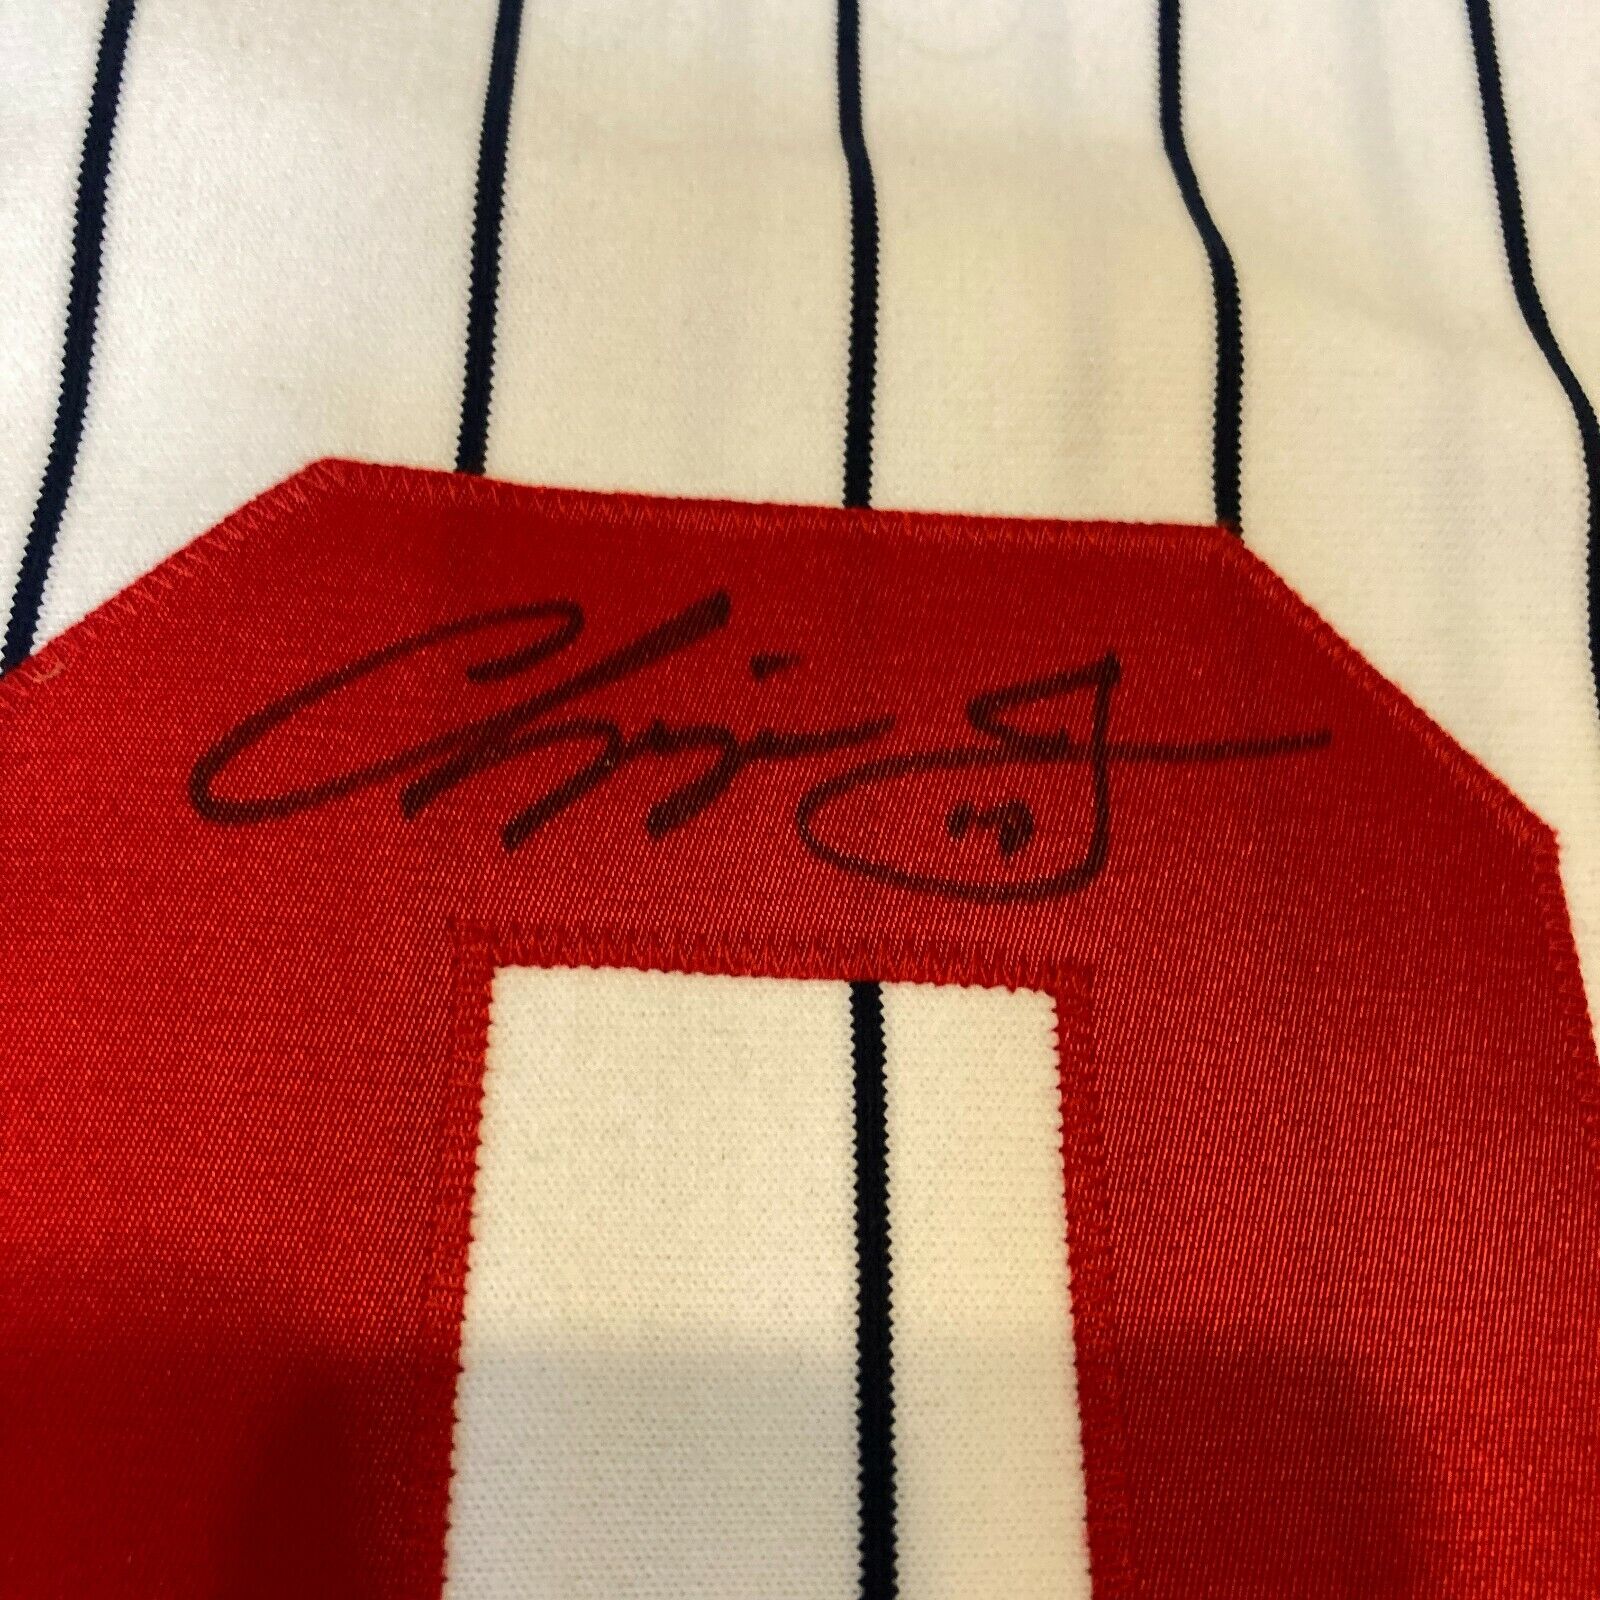 chipper jones autographed jersey